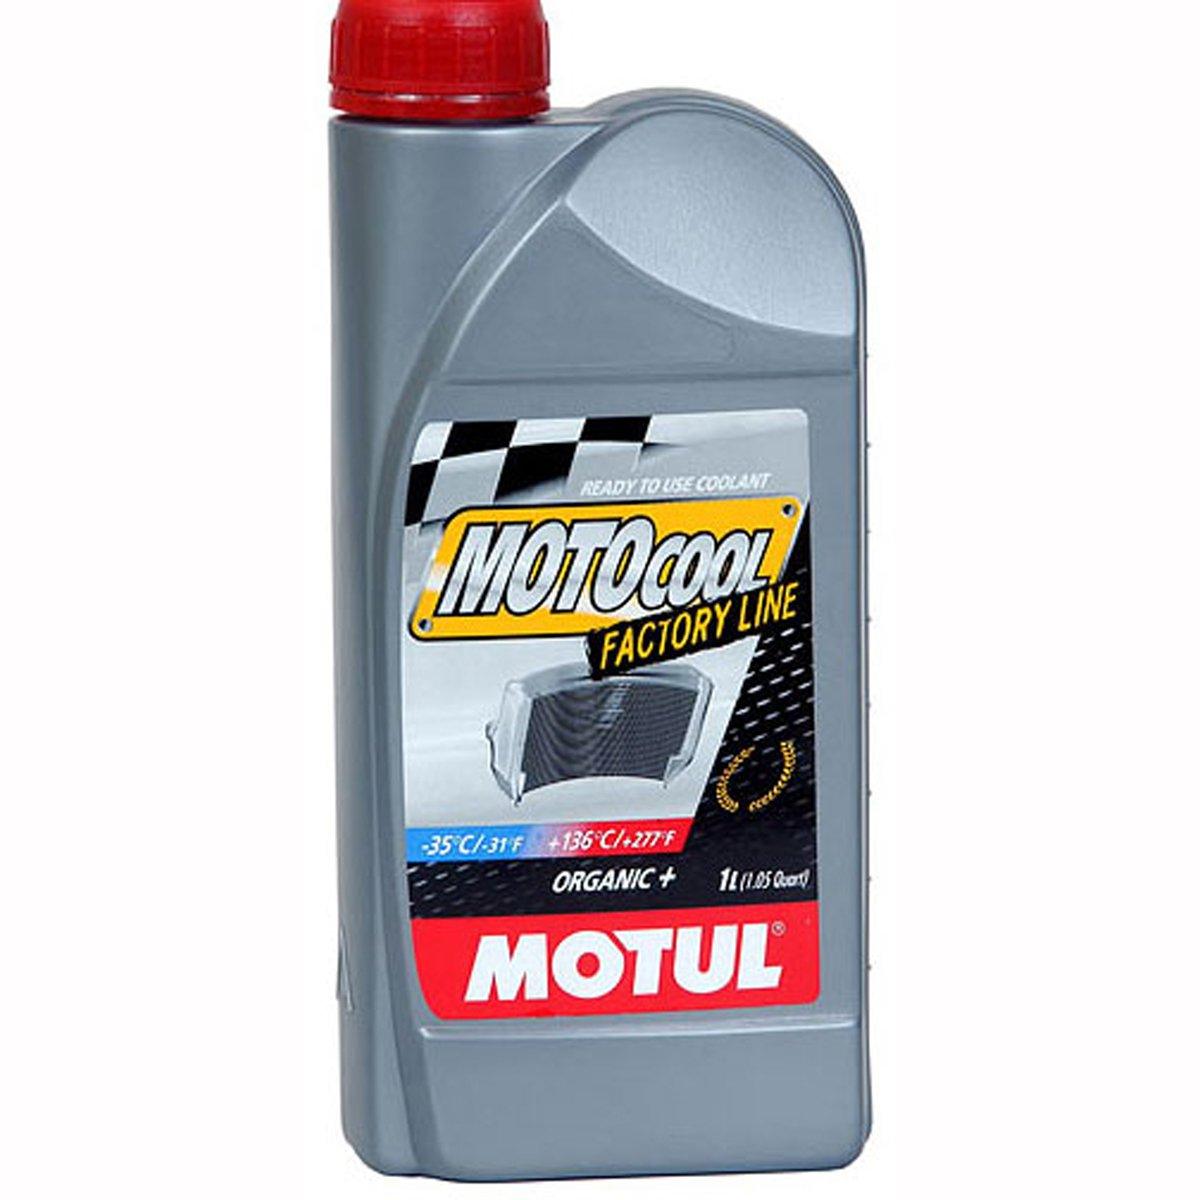 Motul Motocool Factory Line - 1L - Browse our range of Care: Oils & Liquids - getgearedshop 